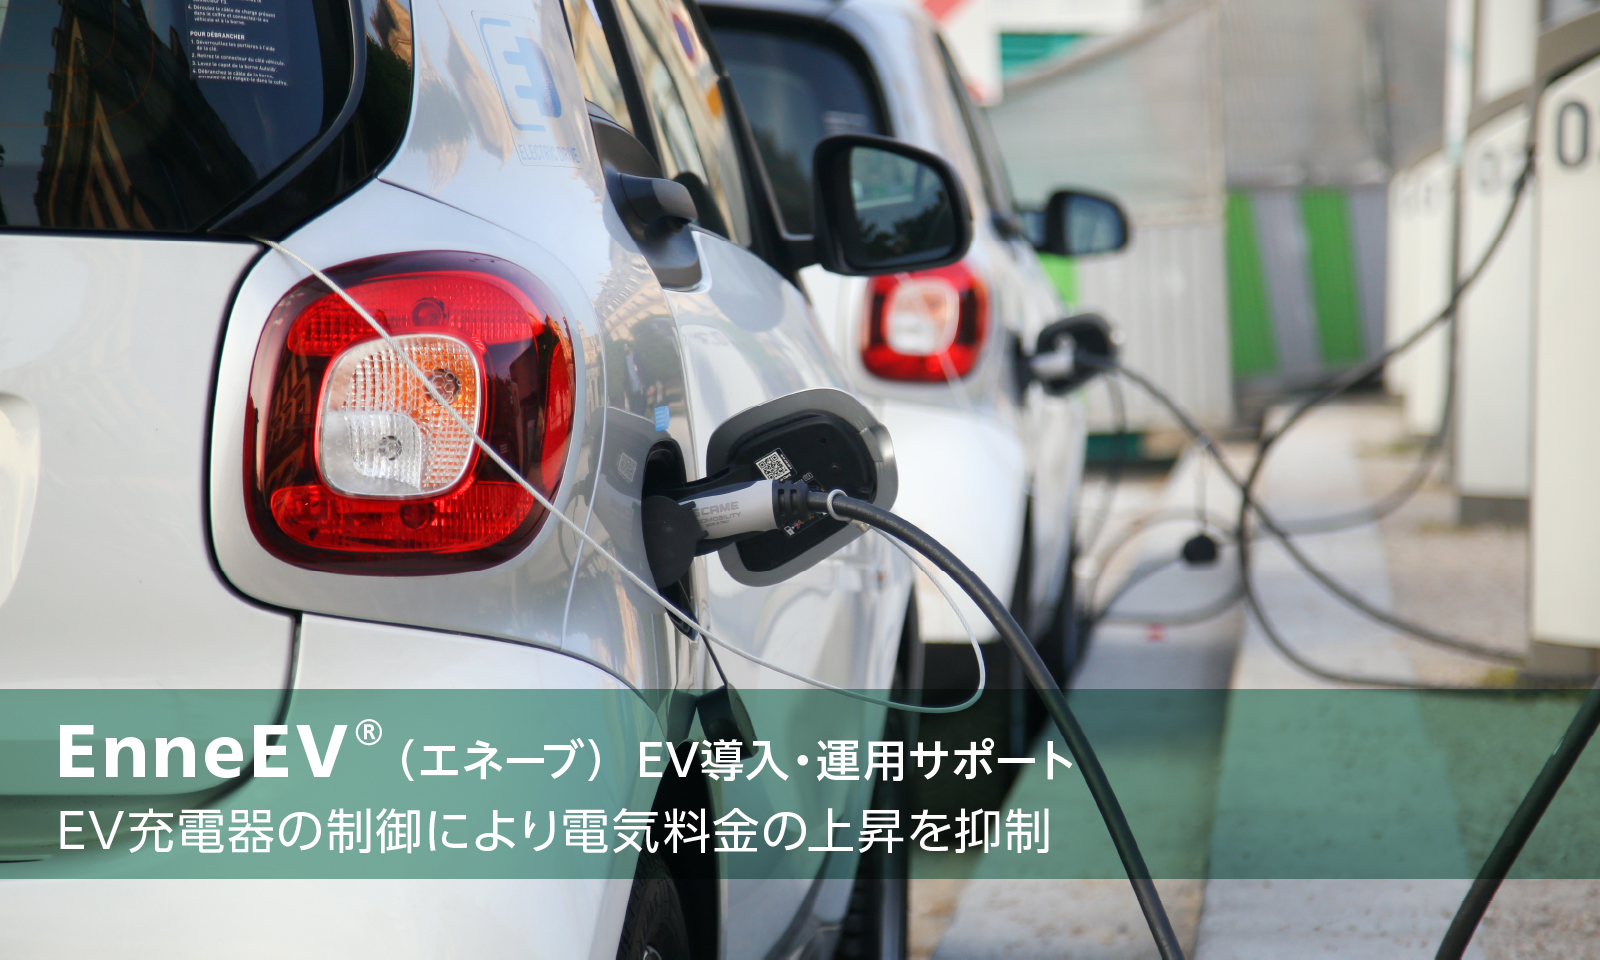 EnneEV （エネーブ）EV導入・運用サポート EV充電器の制御により電気料金の上昇を抑制